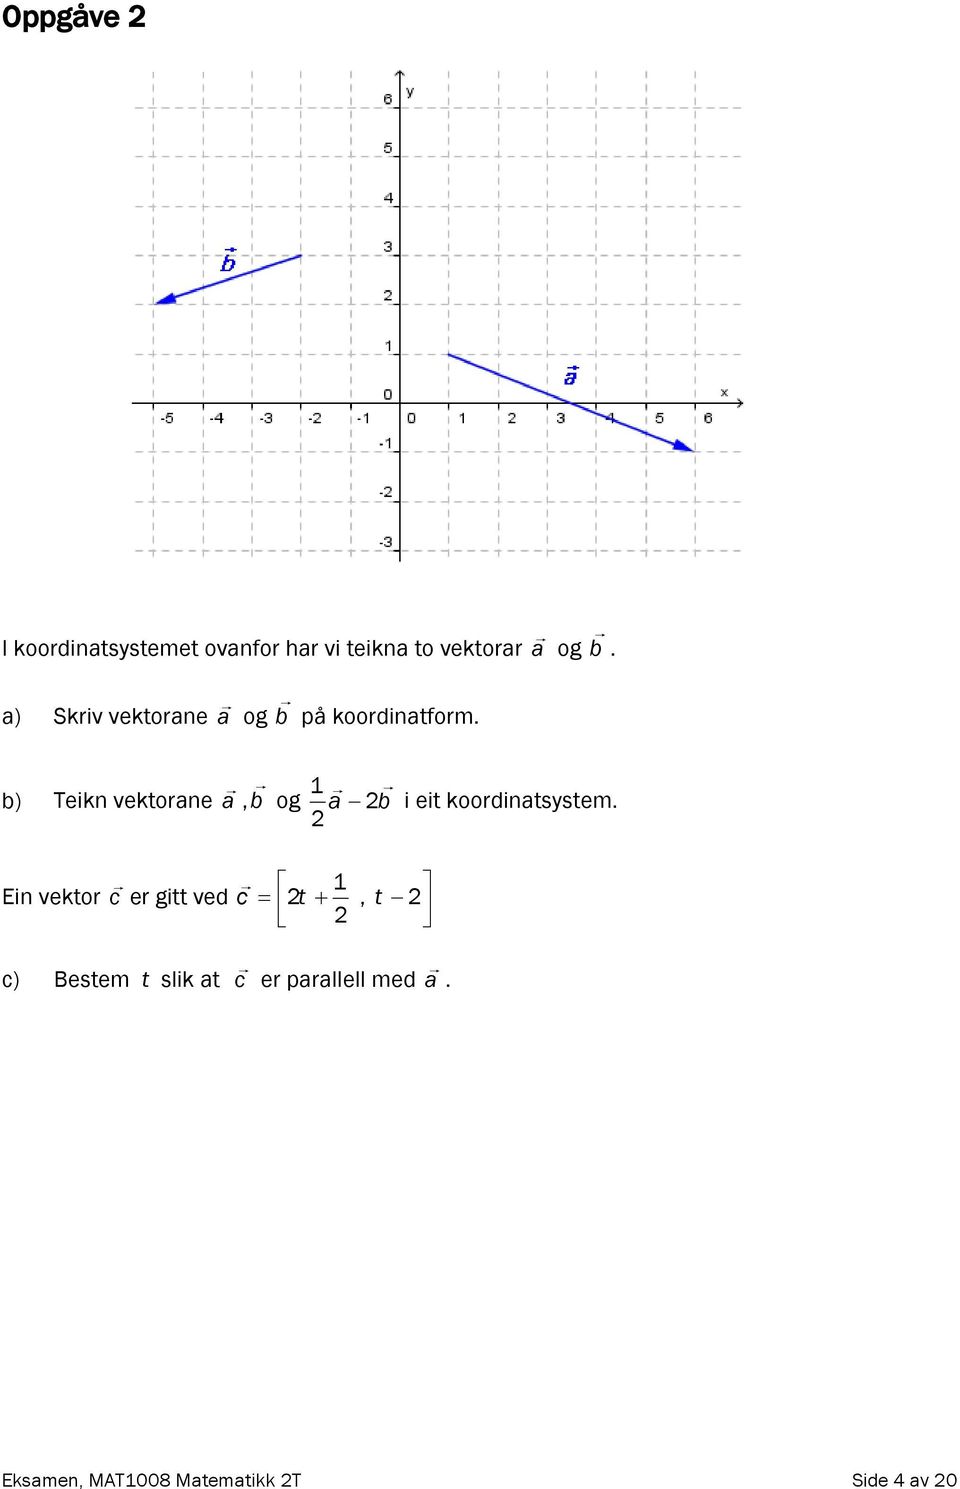 b) Teikn vektorane a, b 1 og a b i eit koordinatsystem.